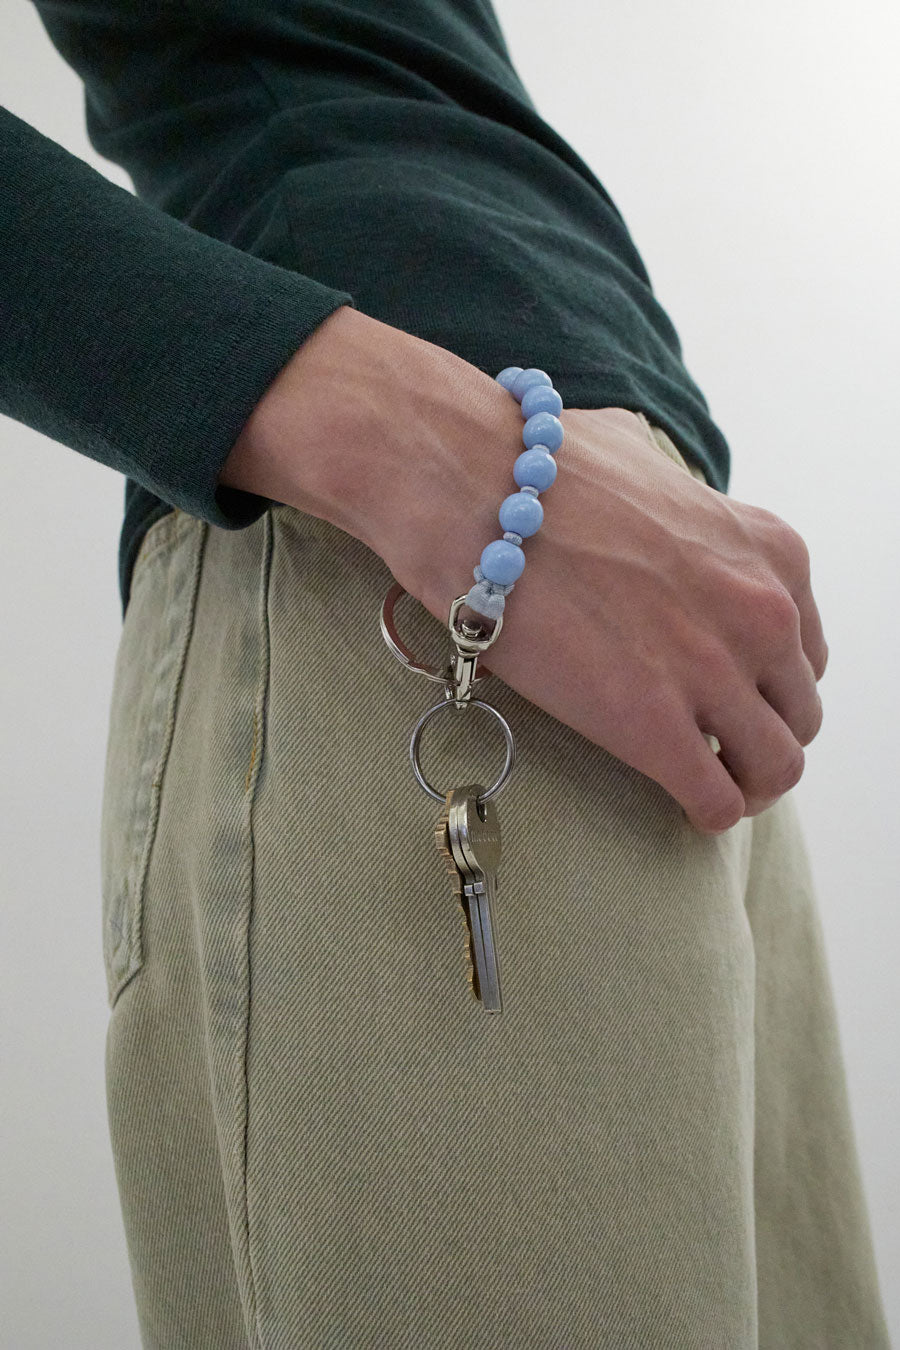 Ina Seifart Perlen Short Keyholder in Pastel Blue with Light Grey Thread